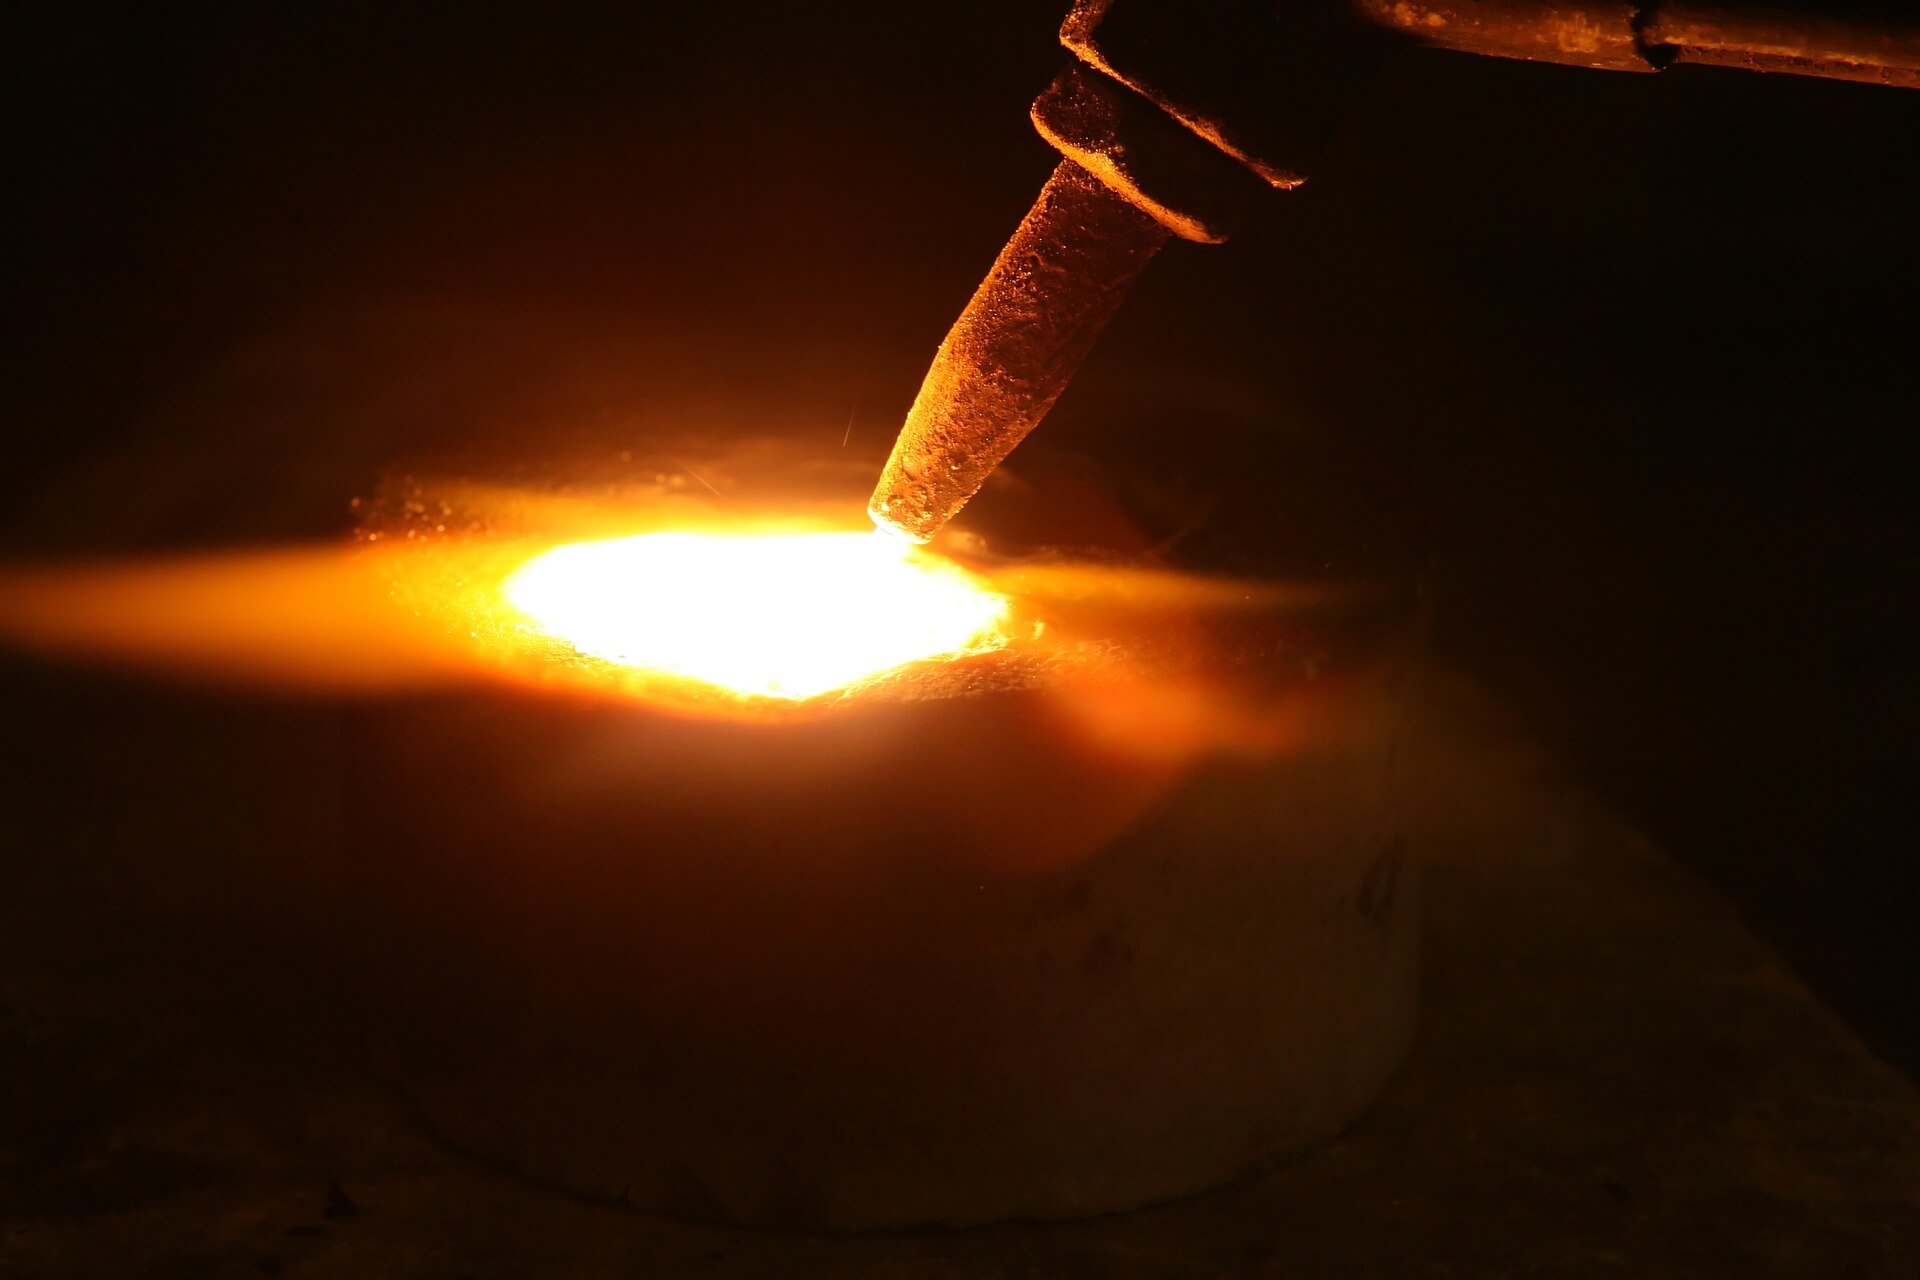 Oxygen-acetylene welding is the most dangerous type of welding